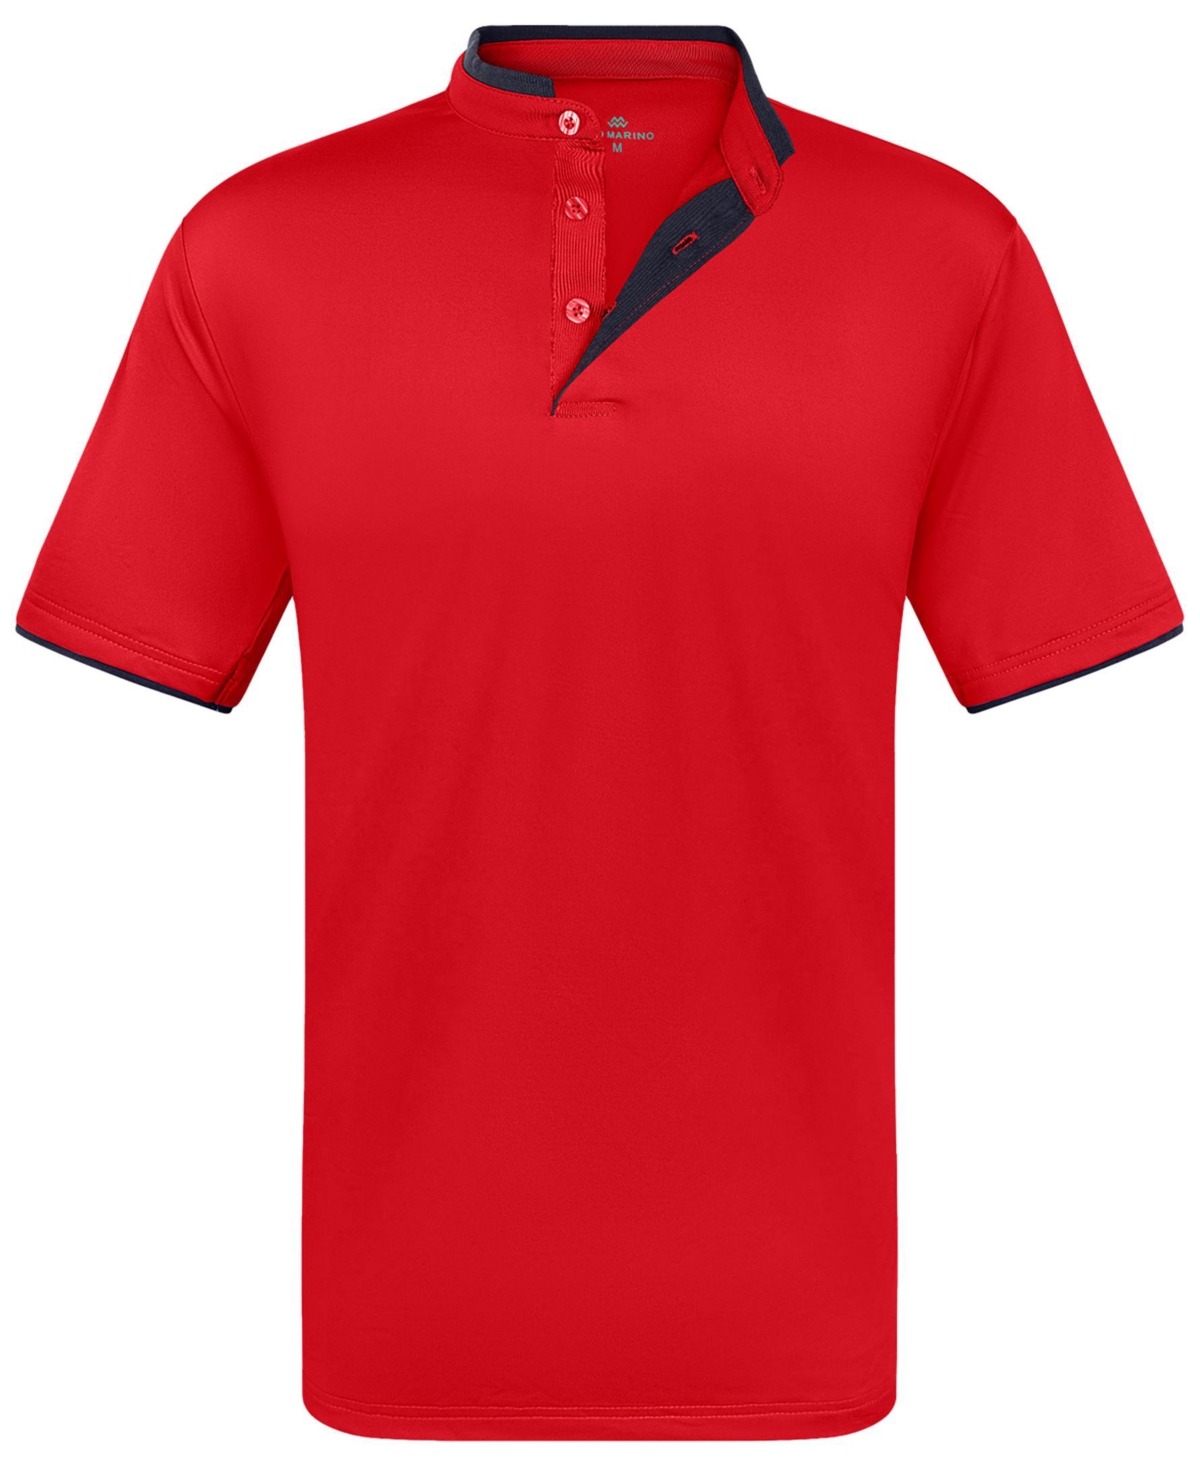 Big & Tall Short Sleeve Henley Polo Shirt with Contrast-Trim - Sky blue